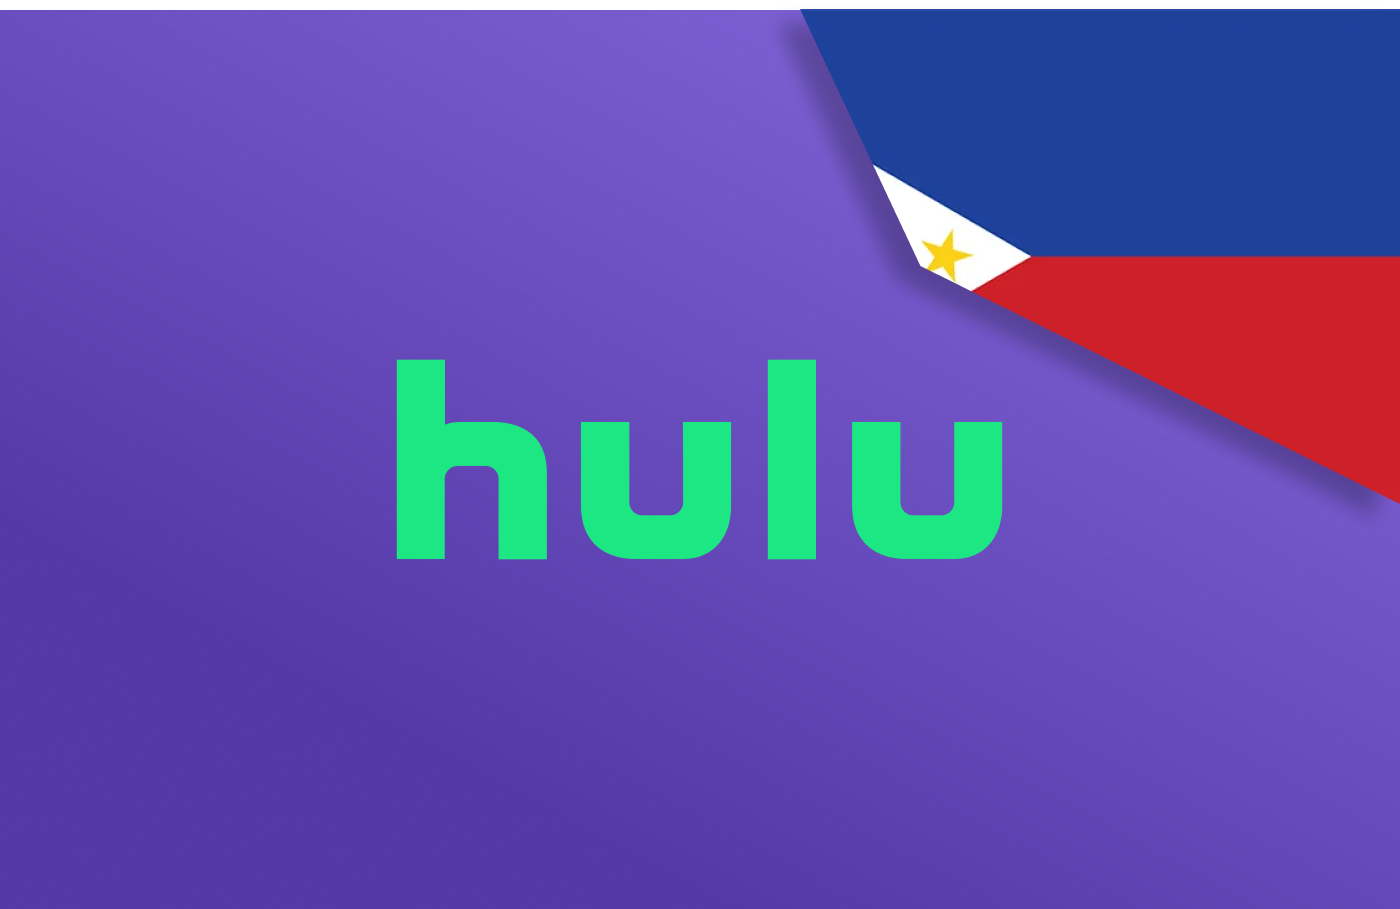 Watch Hulu in Philippines